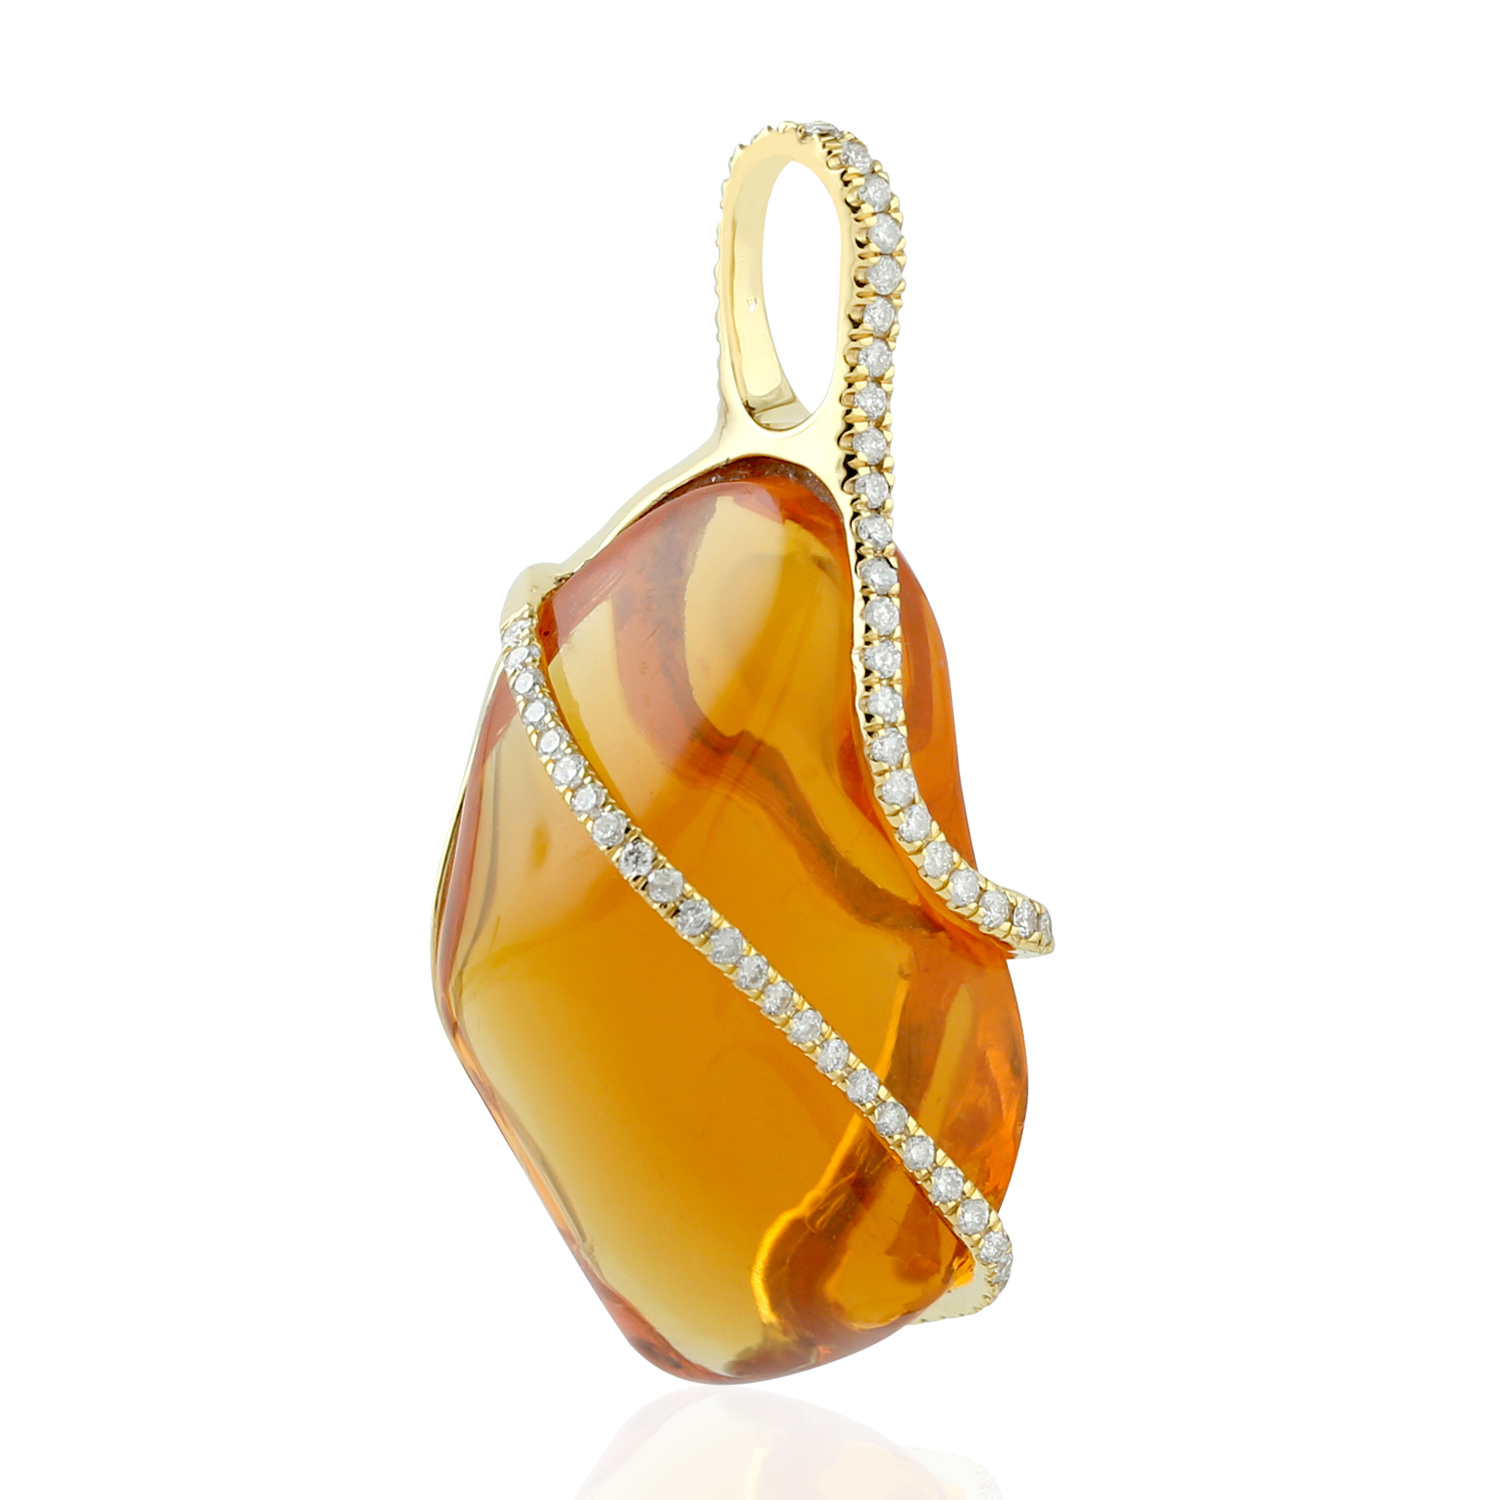 27.11ct Fire Opal Pendant 18k Yellow Gold Diamond Handmade Jewelry | eBay